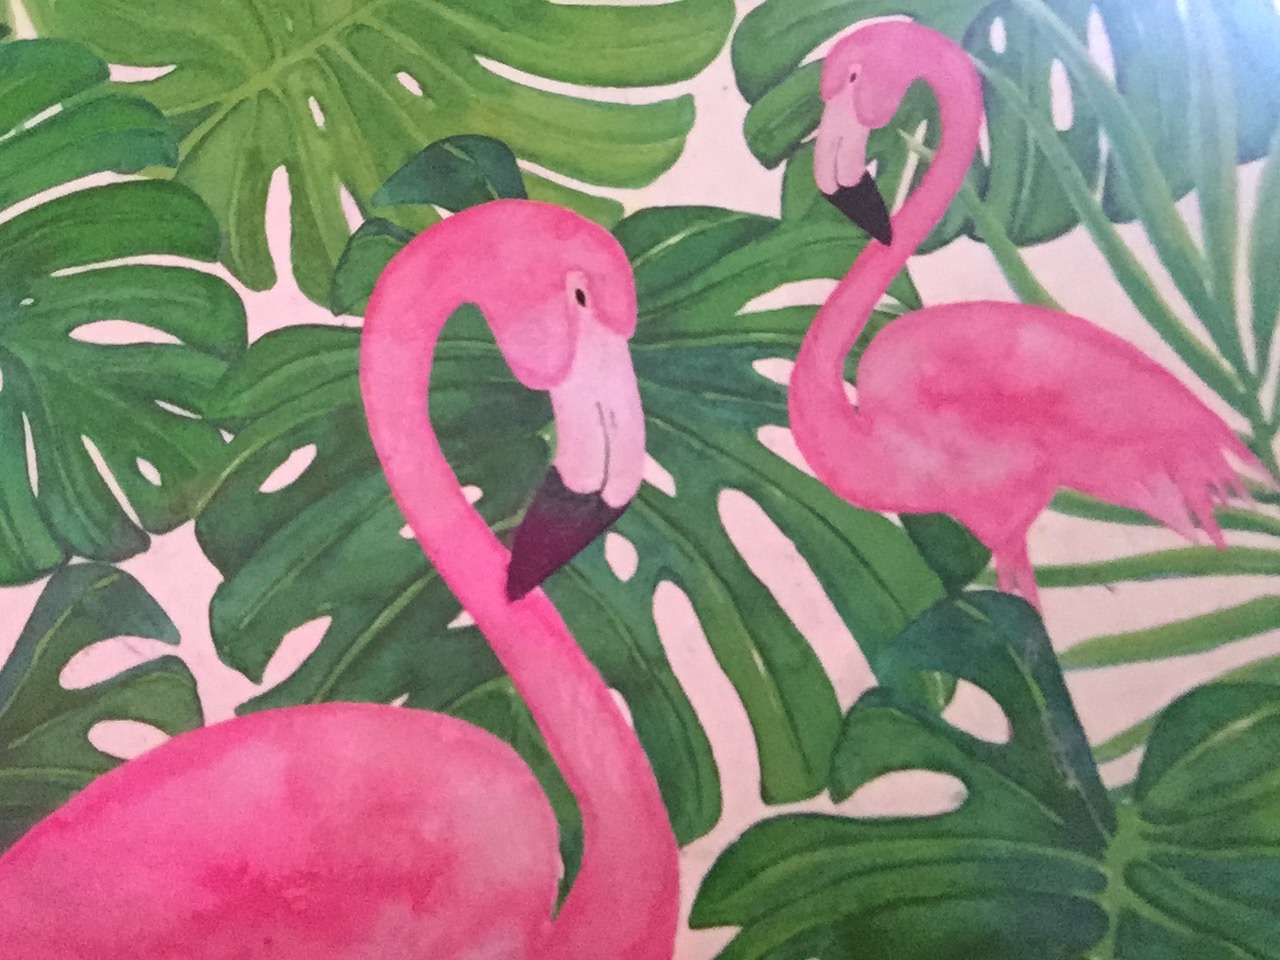 Flamingos puzzle online